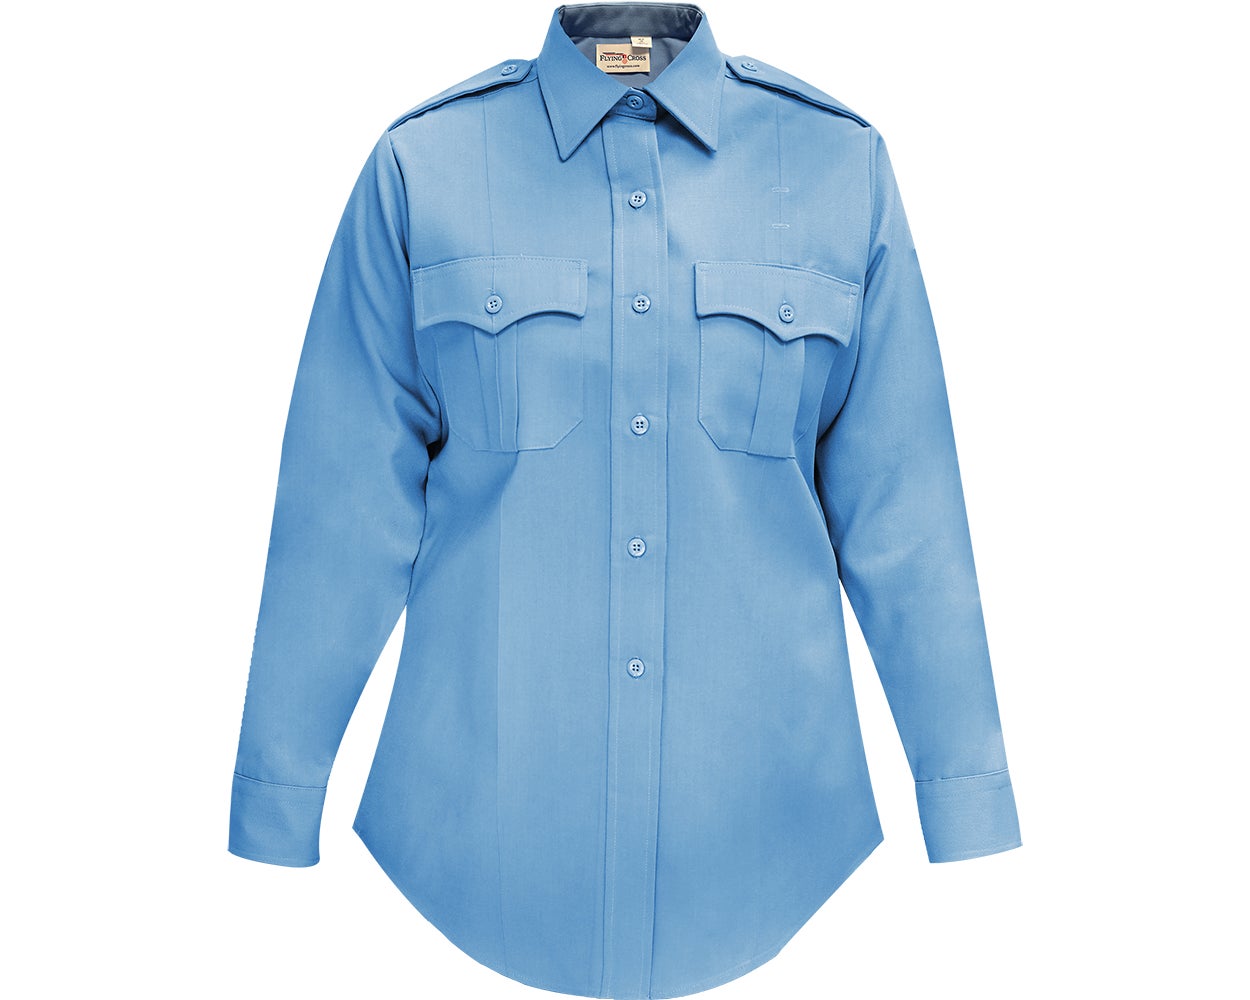 Flying Cross Deluxe Tropical Poly/Rayon Women's Long Sleeve Uniform Shirt